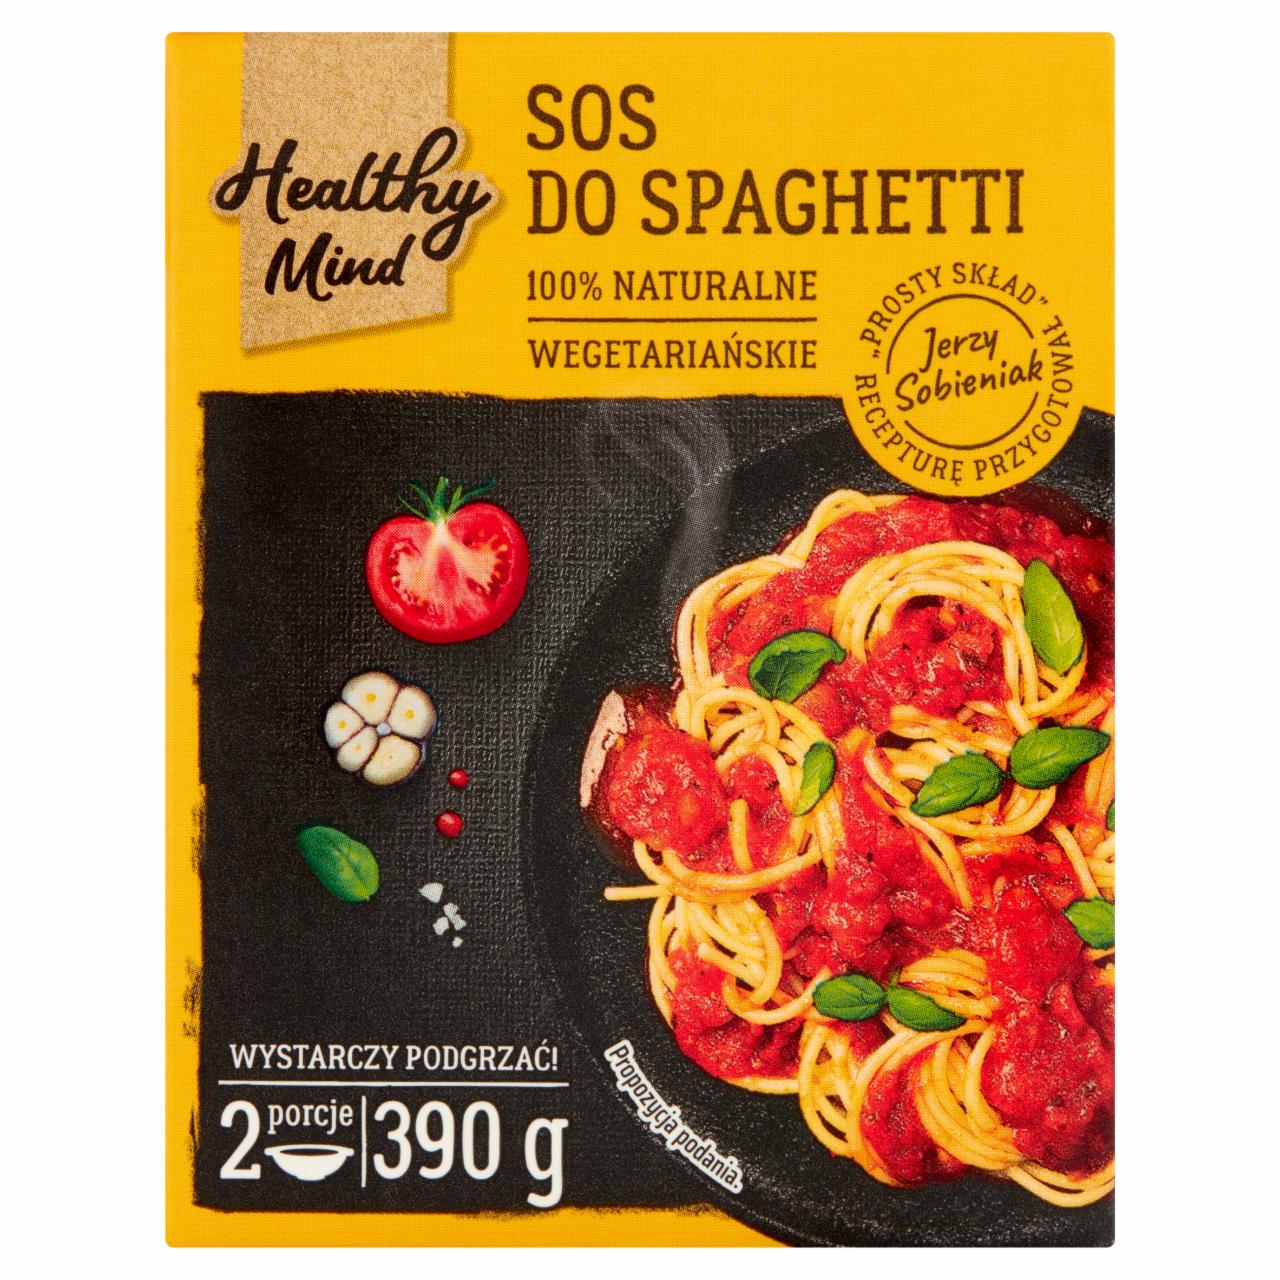 Zdjęcia - Healthy Mind Sos do spaghetti 390 g